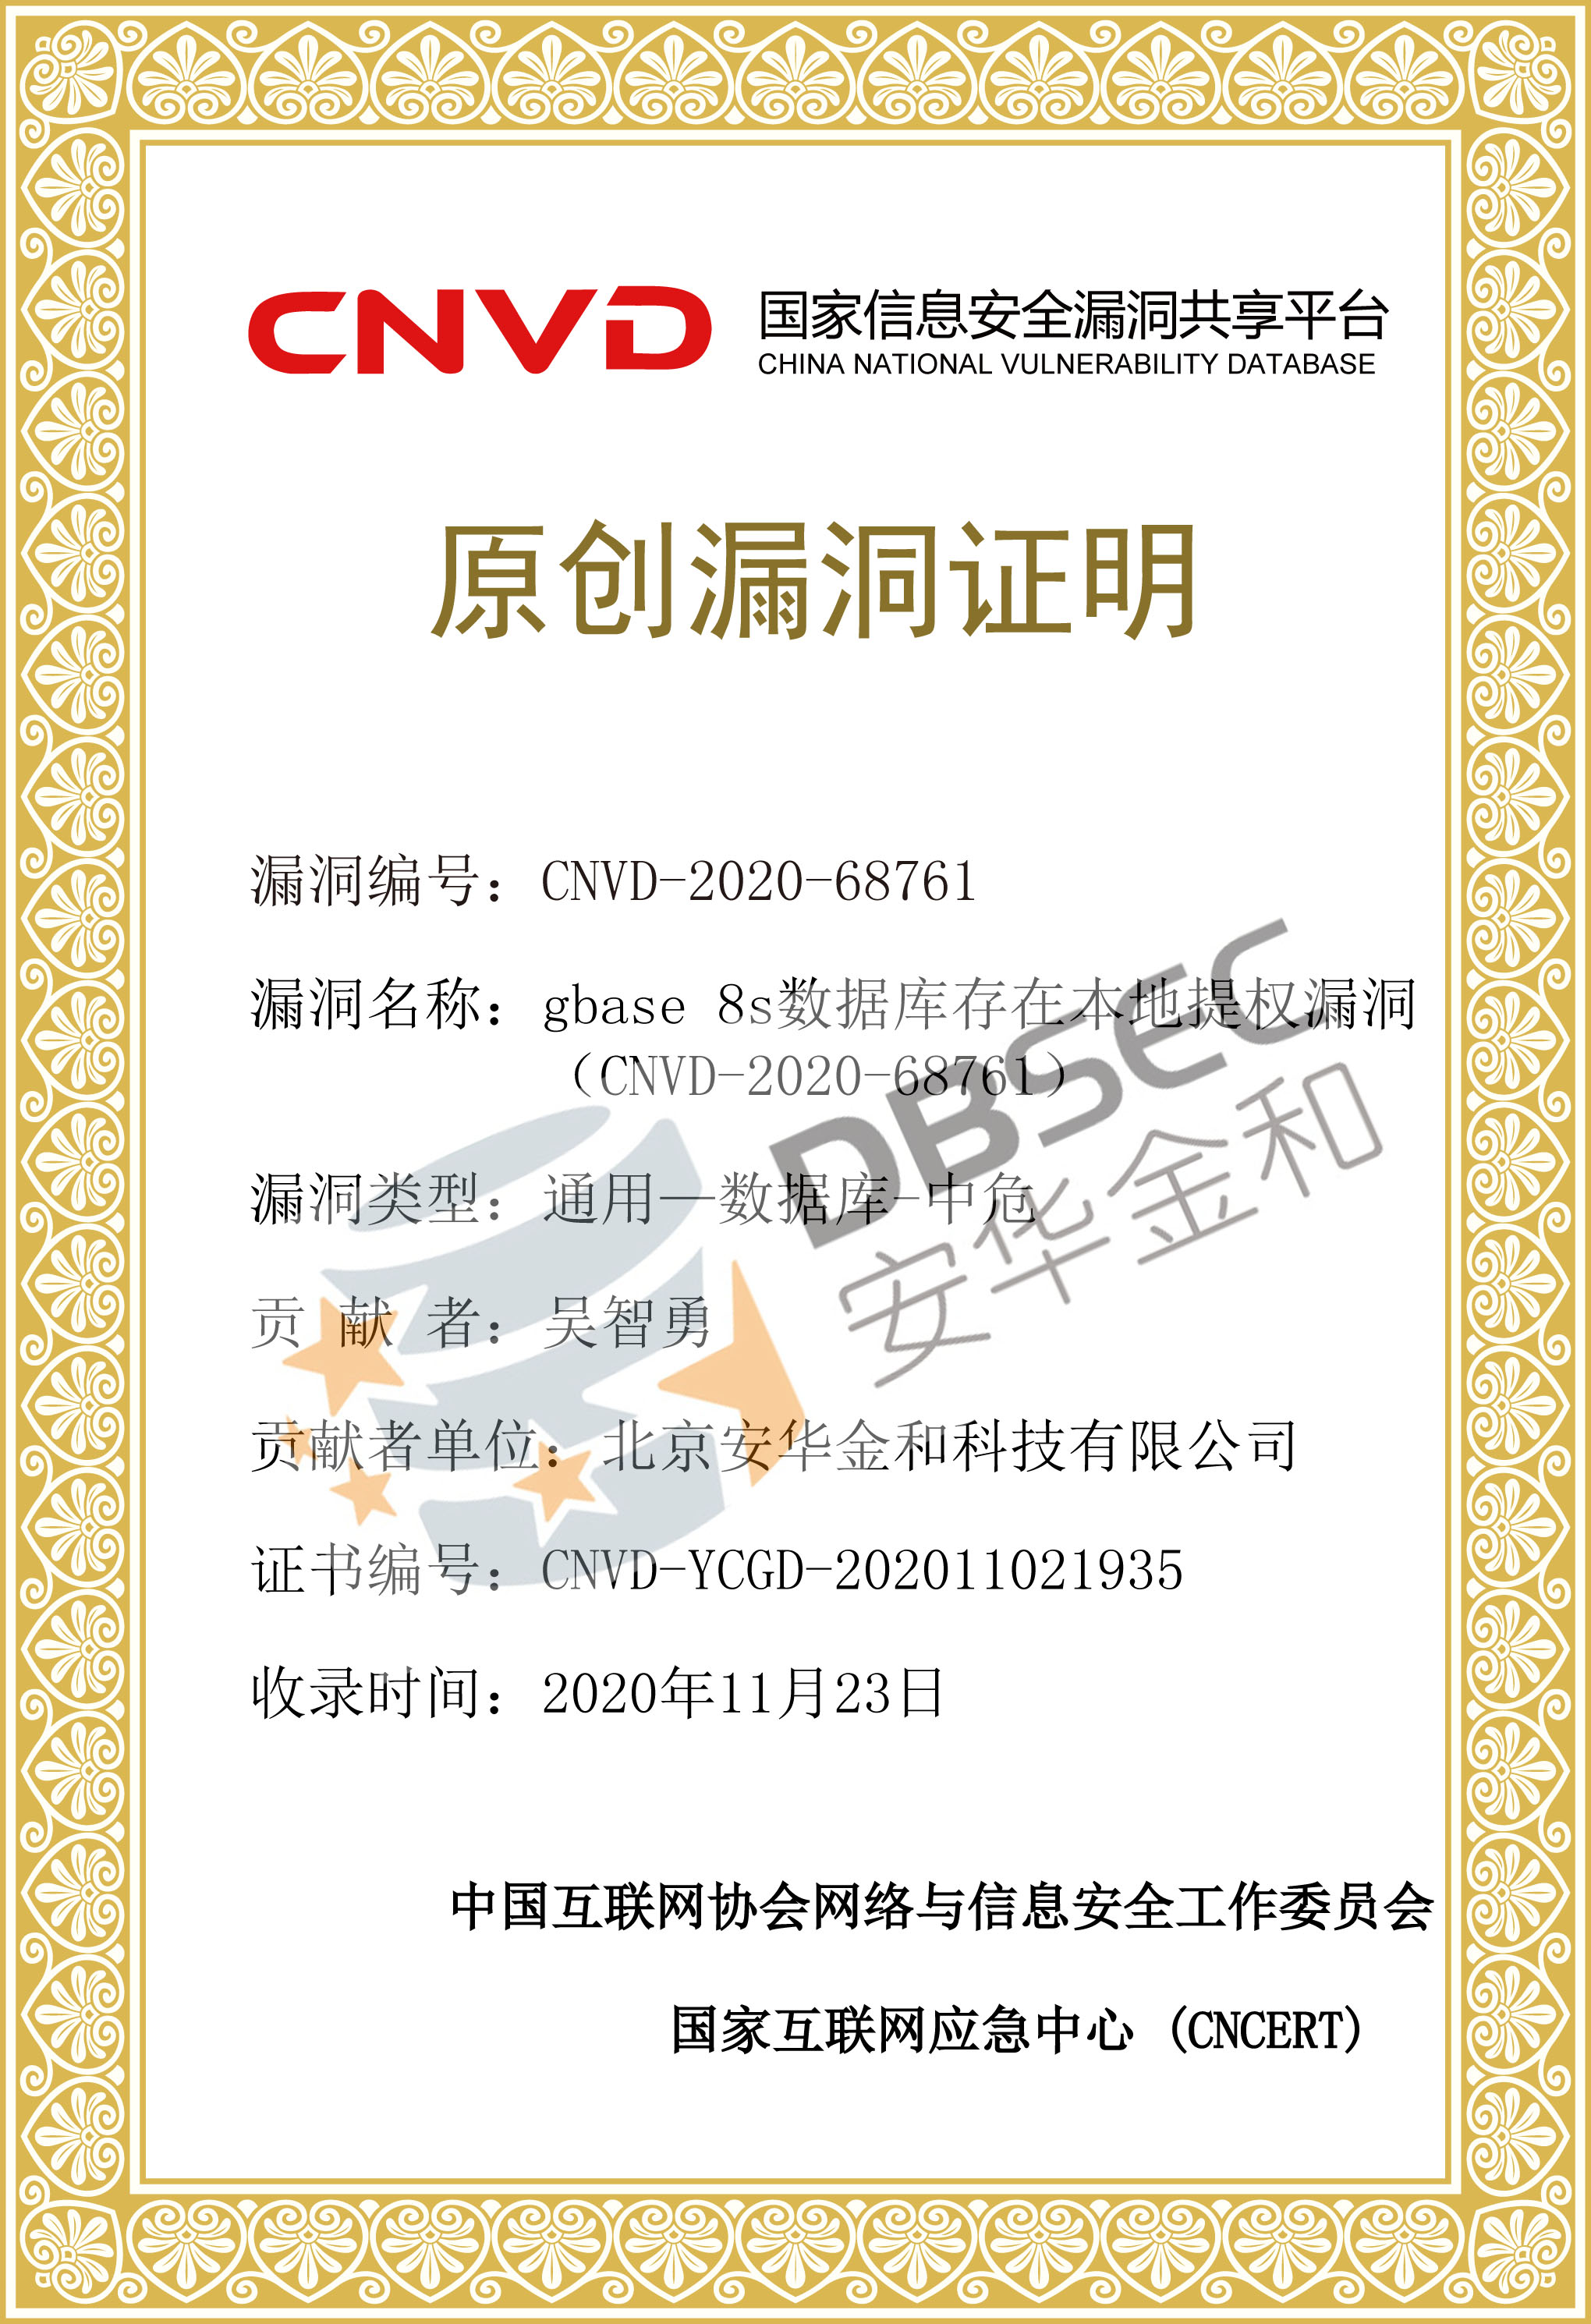 CNVD-YCGD-202011021935